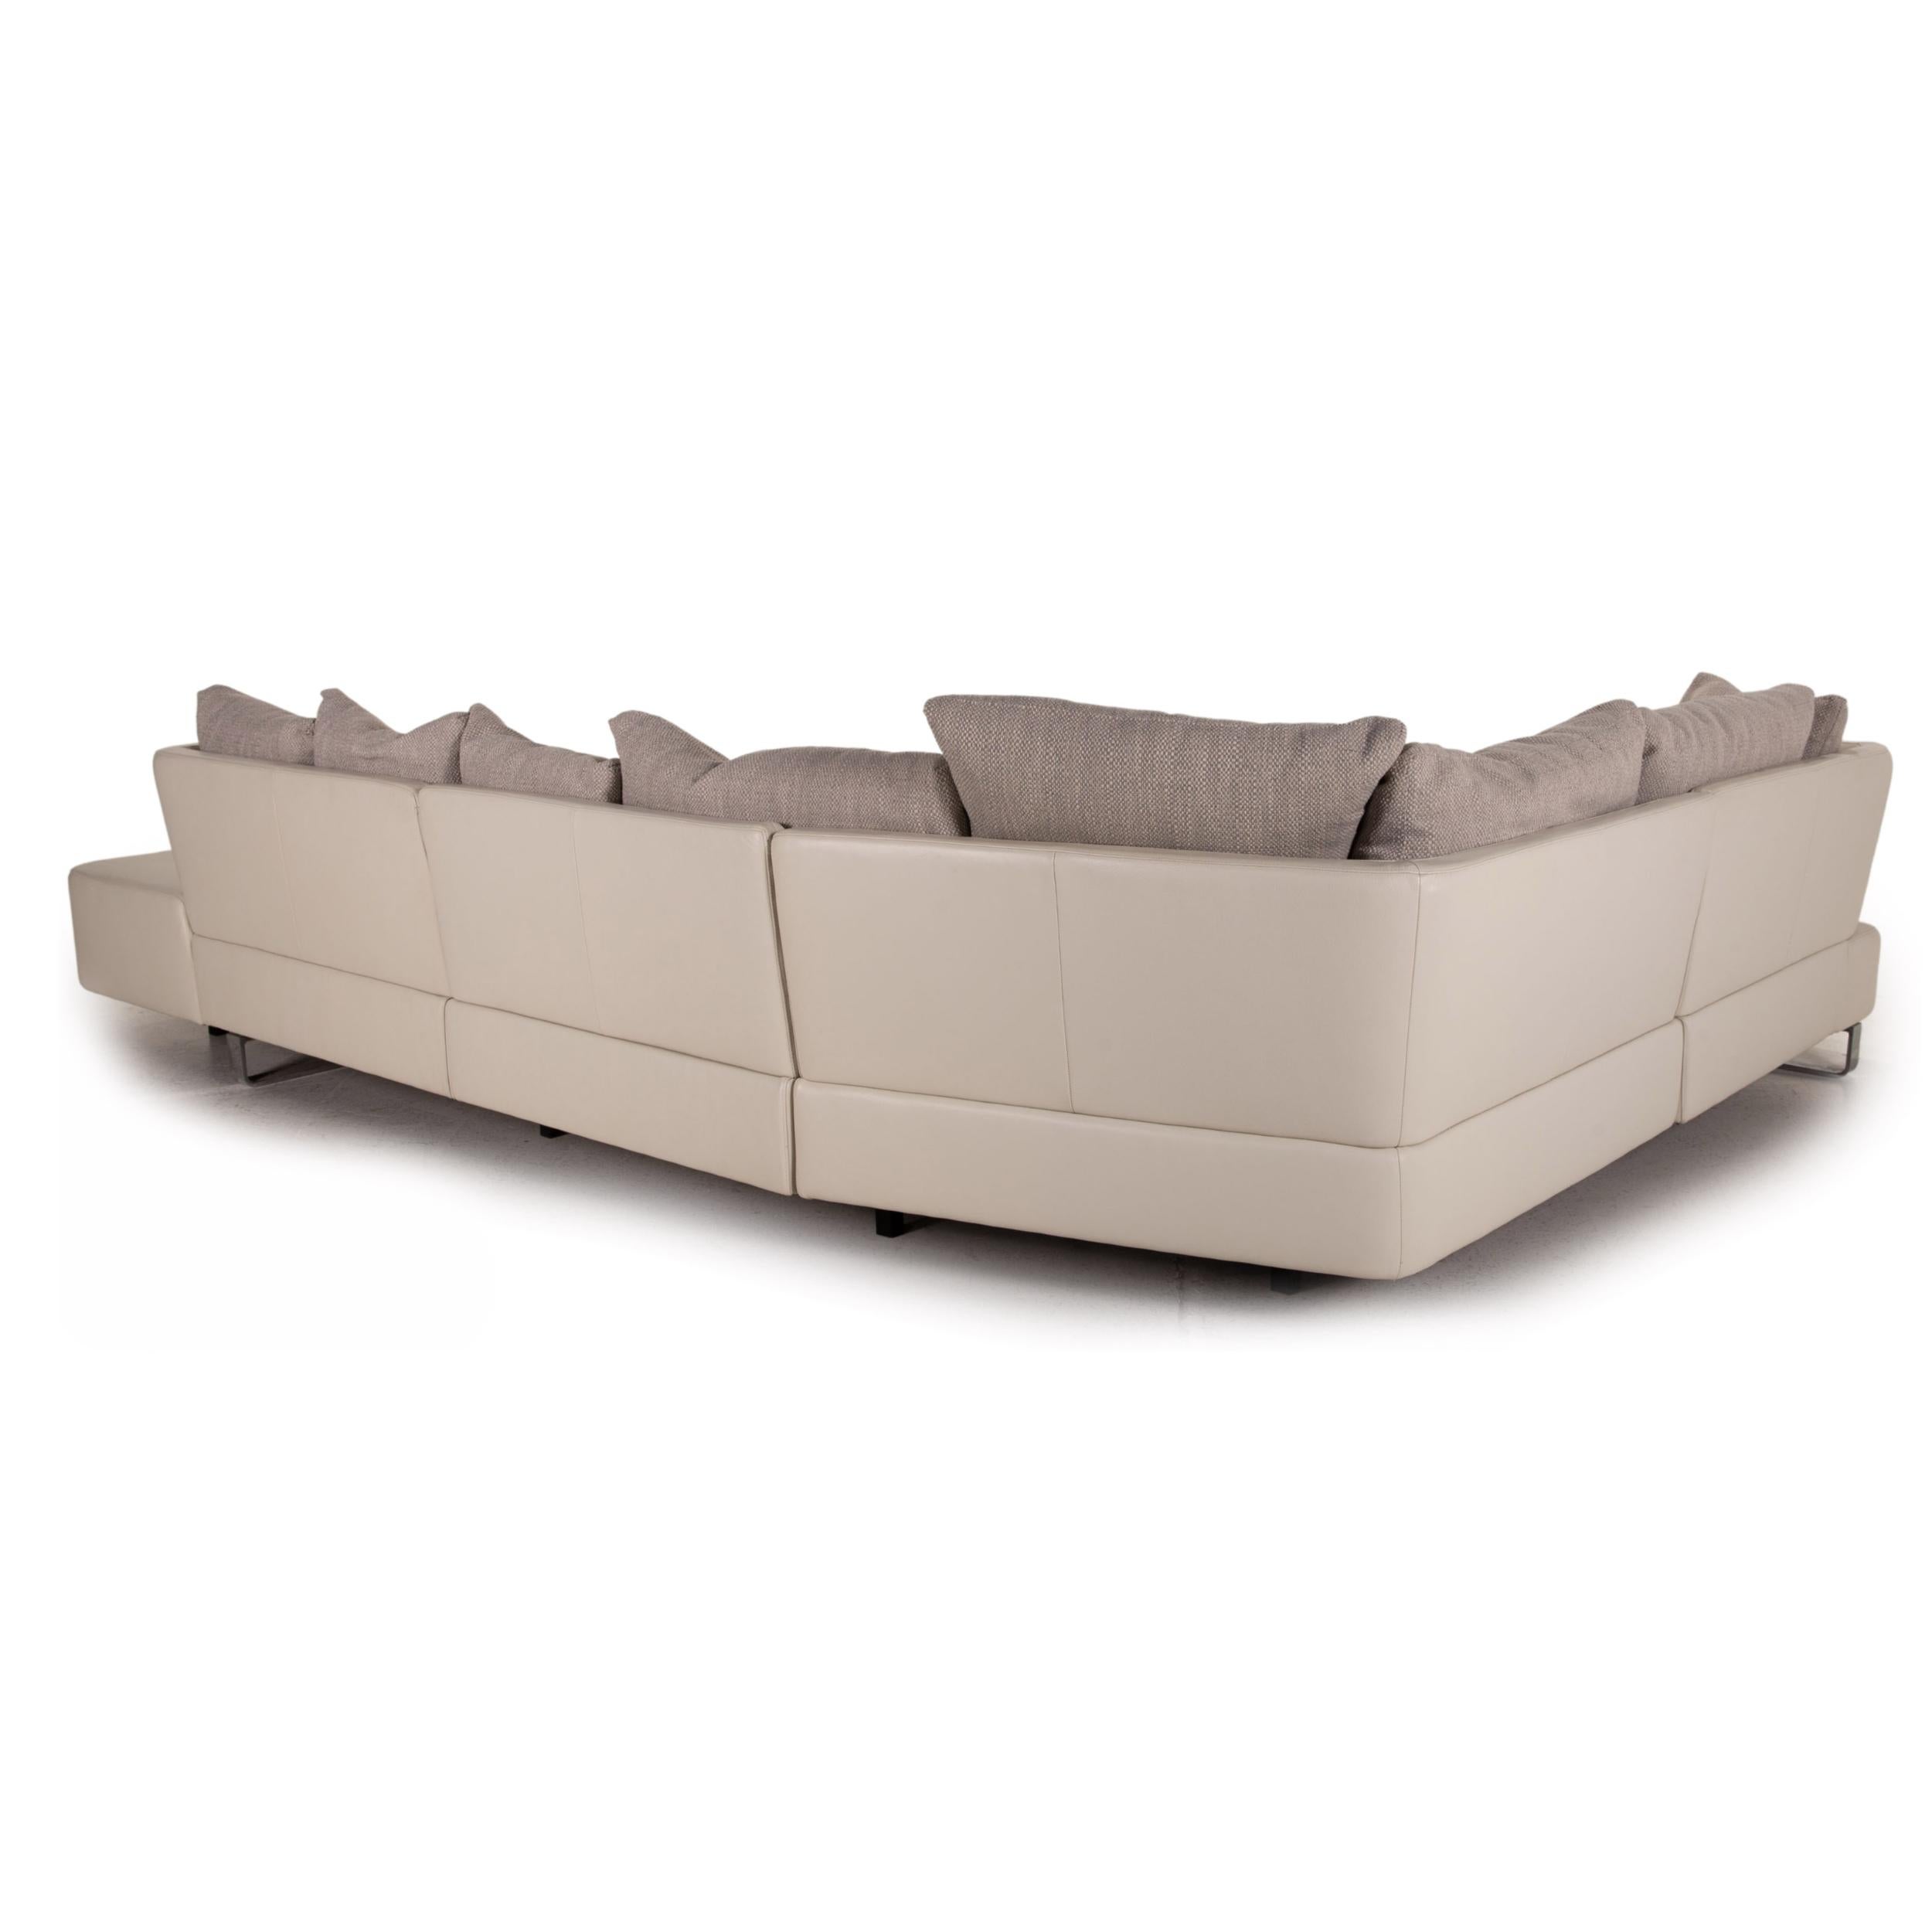 Natuzzi Opus Leather Fabric Corner Sofa Gray Cream Sofa Couch For Sale 4